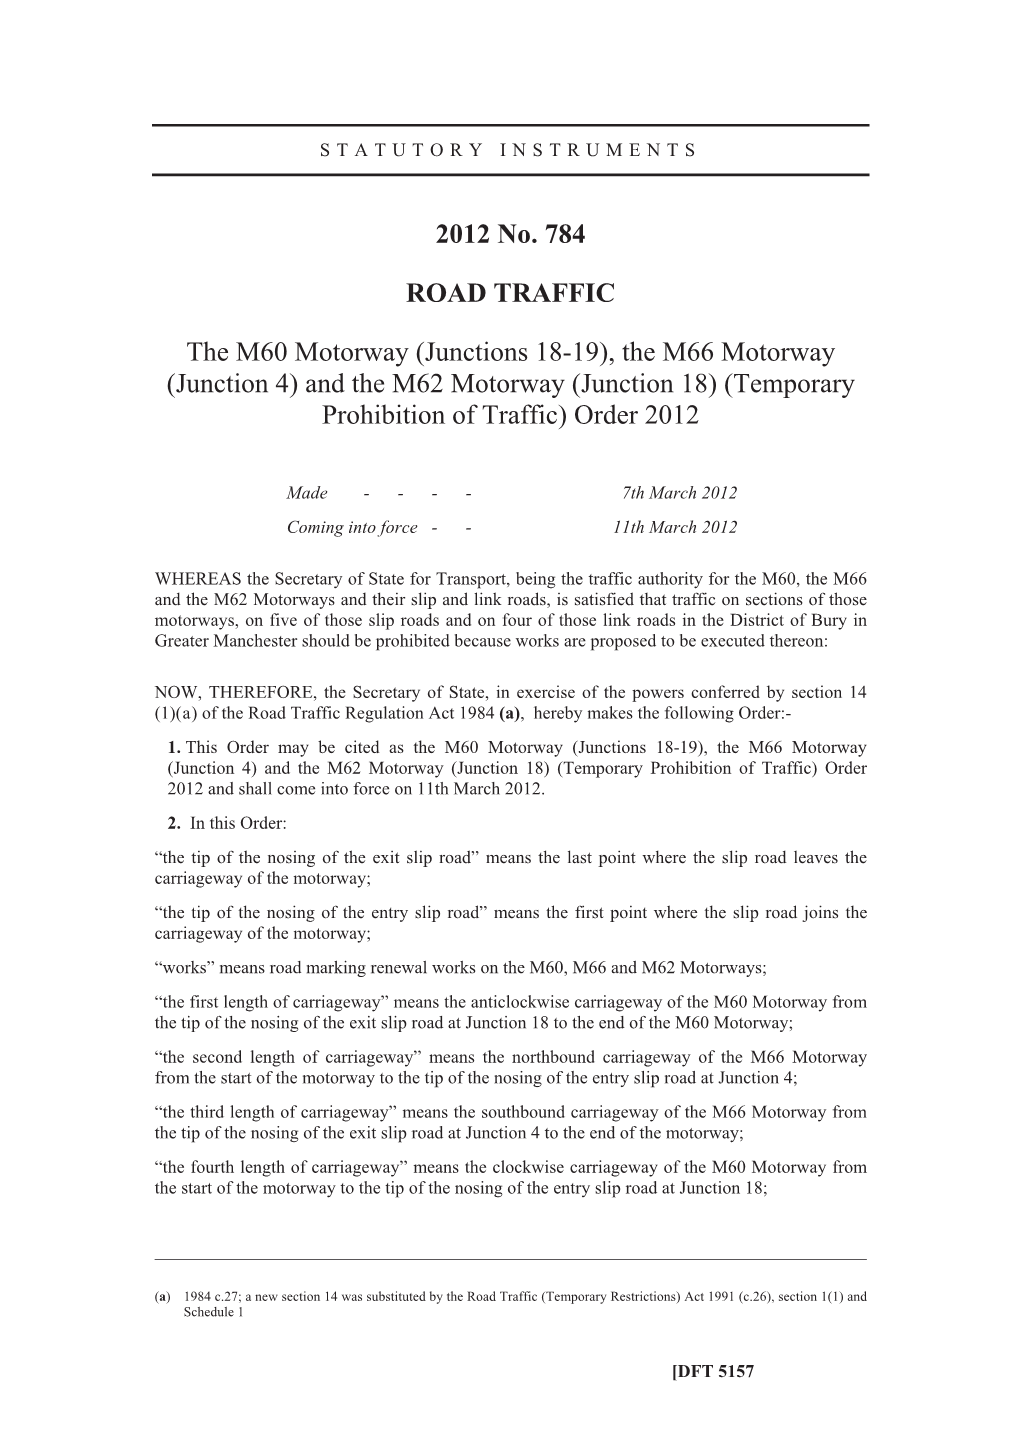 The M60 Motorway (Junctions 18-19), the M66 Motorway (Junction 4) and the M62 Motorway (Junction 18) (Temporary Prohibition of Traffic) Order 2012